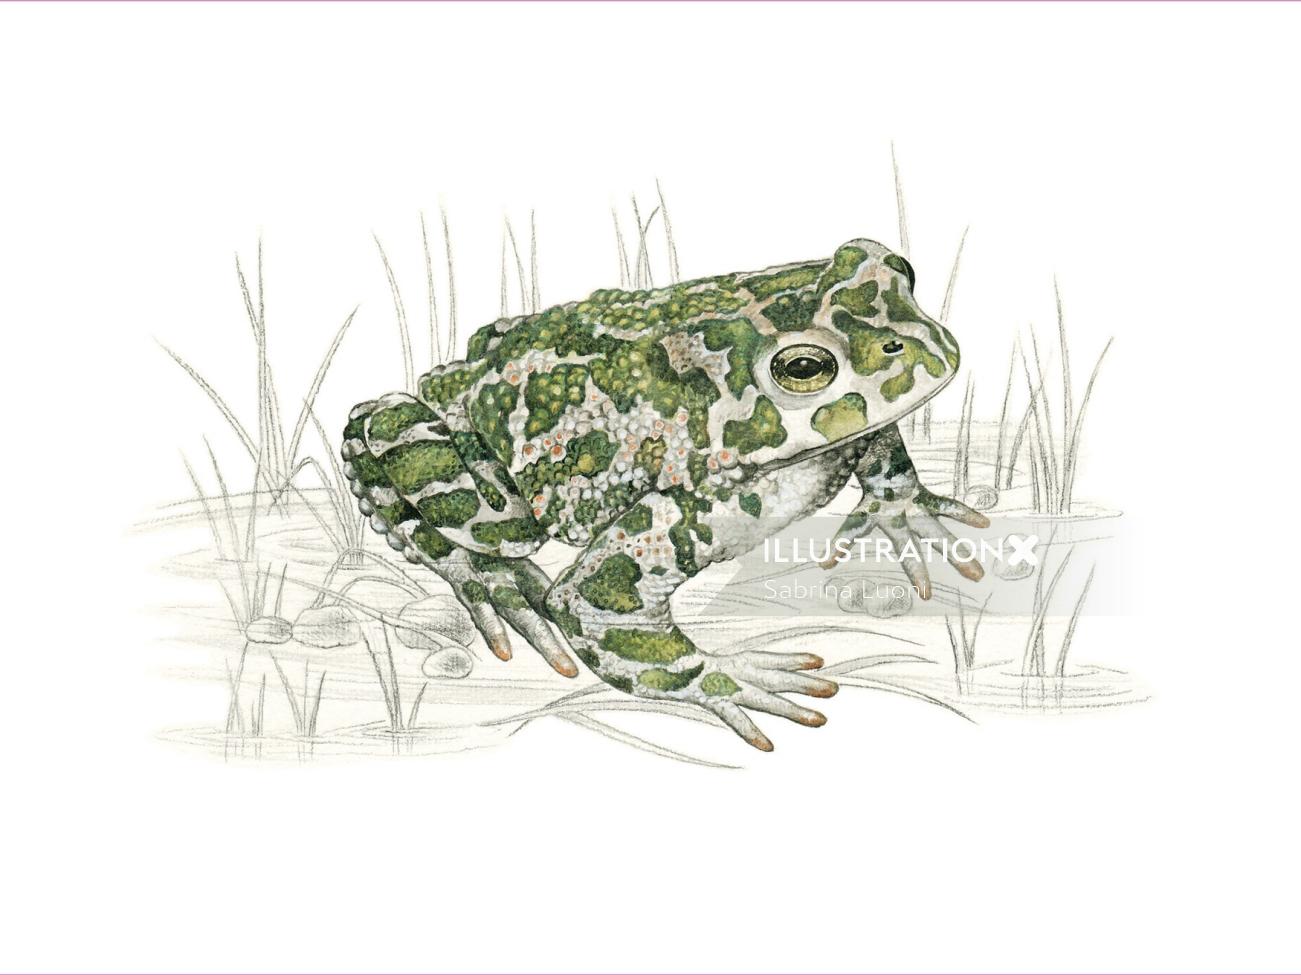 Green Toad (Bufo viridis)